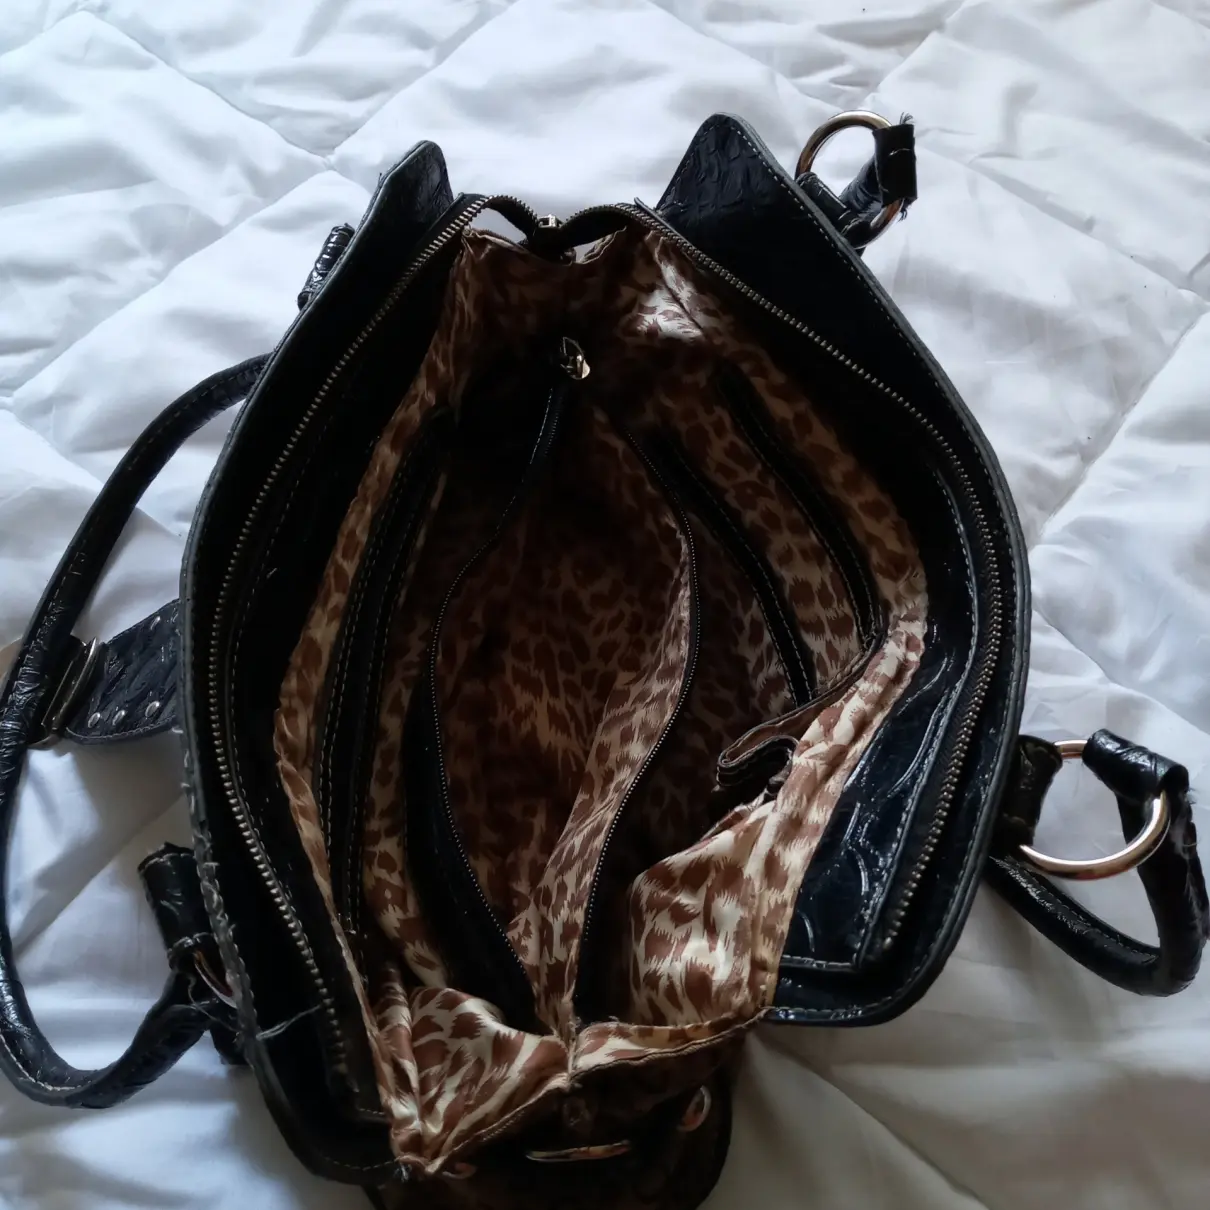 Leather handbag GUESS